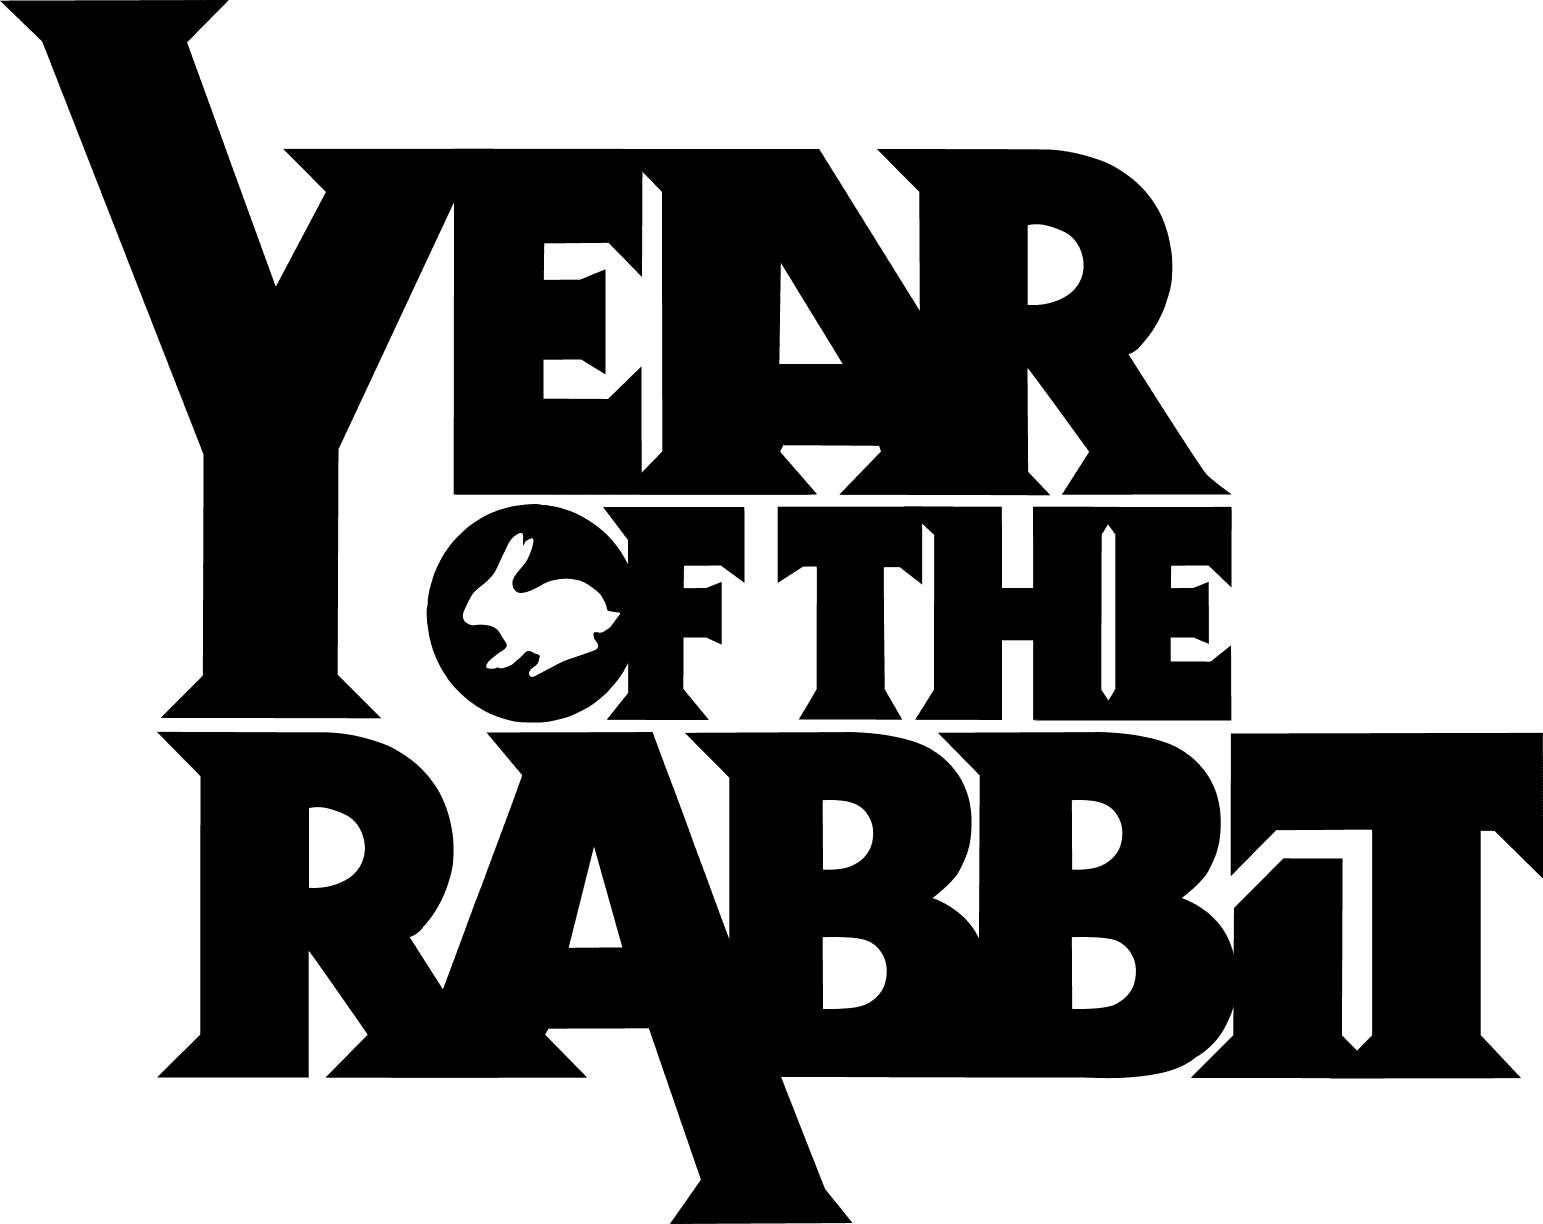 Year of the Rabbit logo